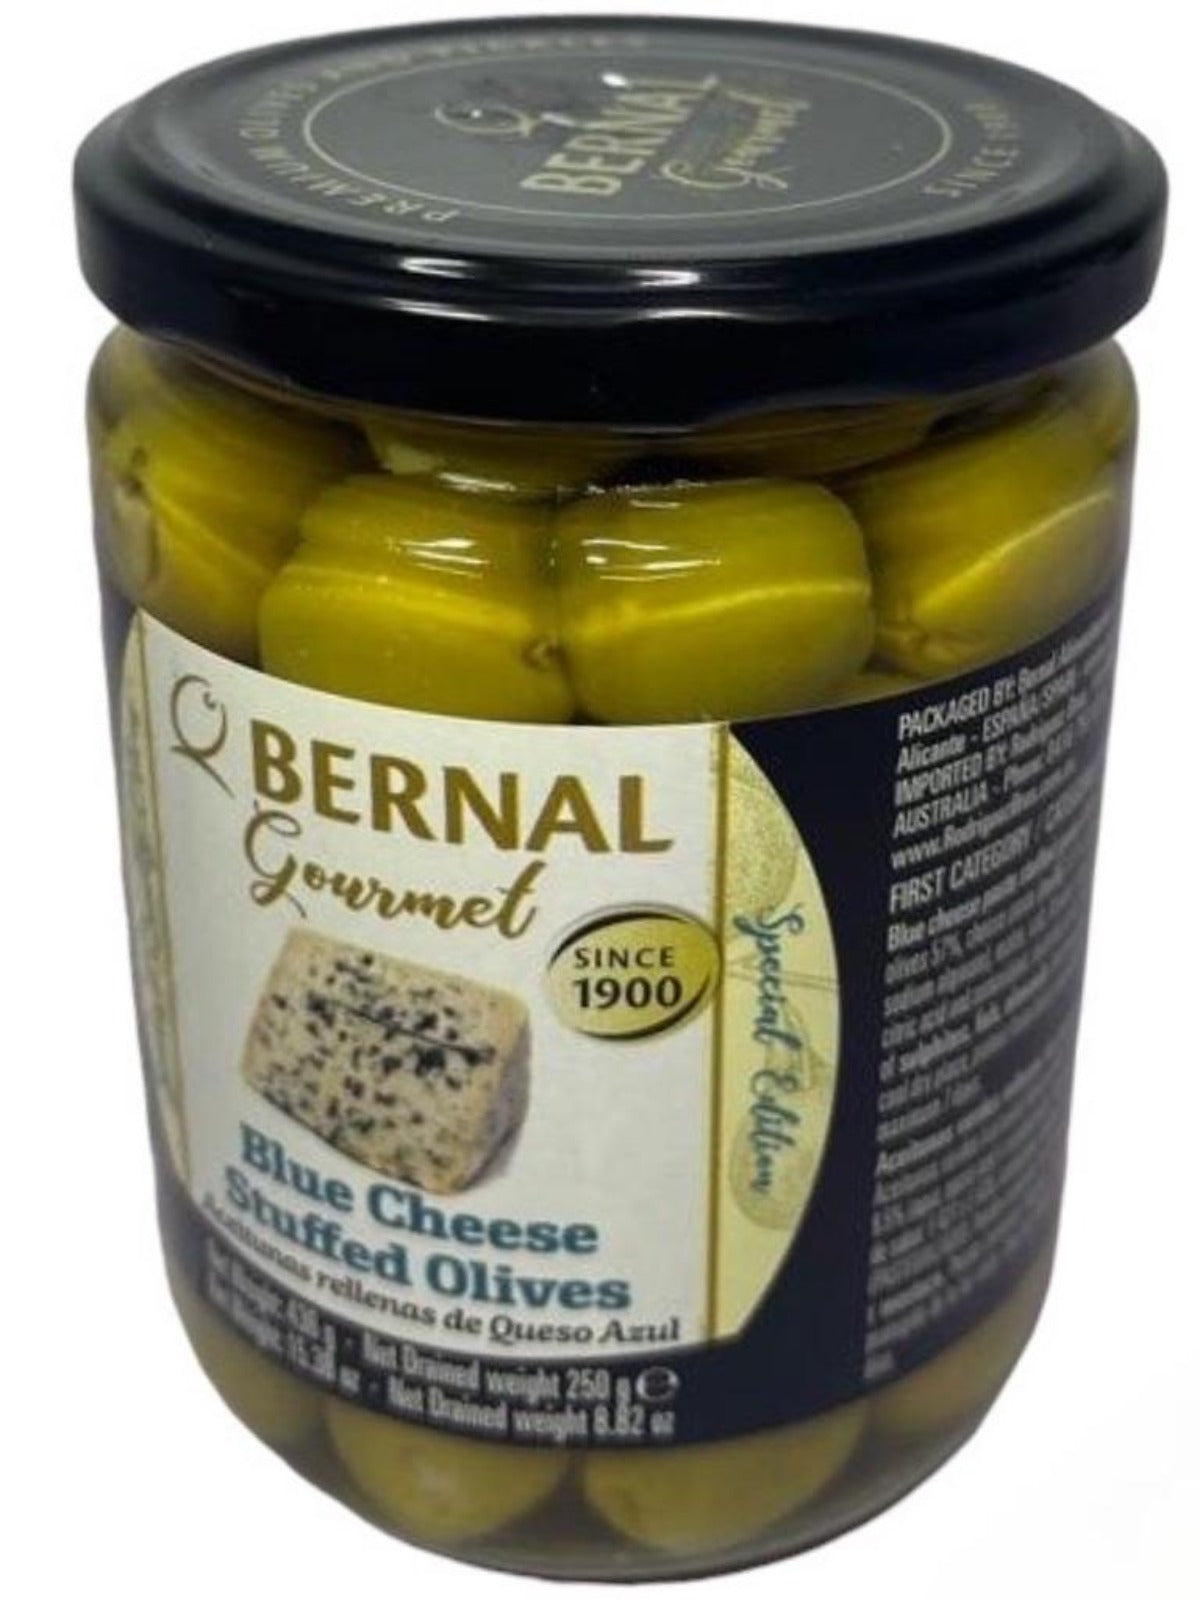 Bernal Gourmet Spanish Blue Cheese Stuffed Olives 2 pack 436g x2